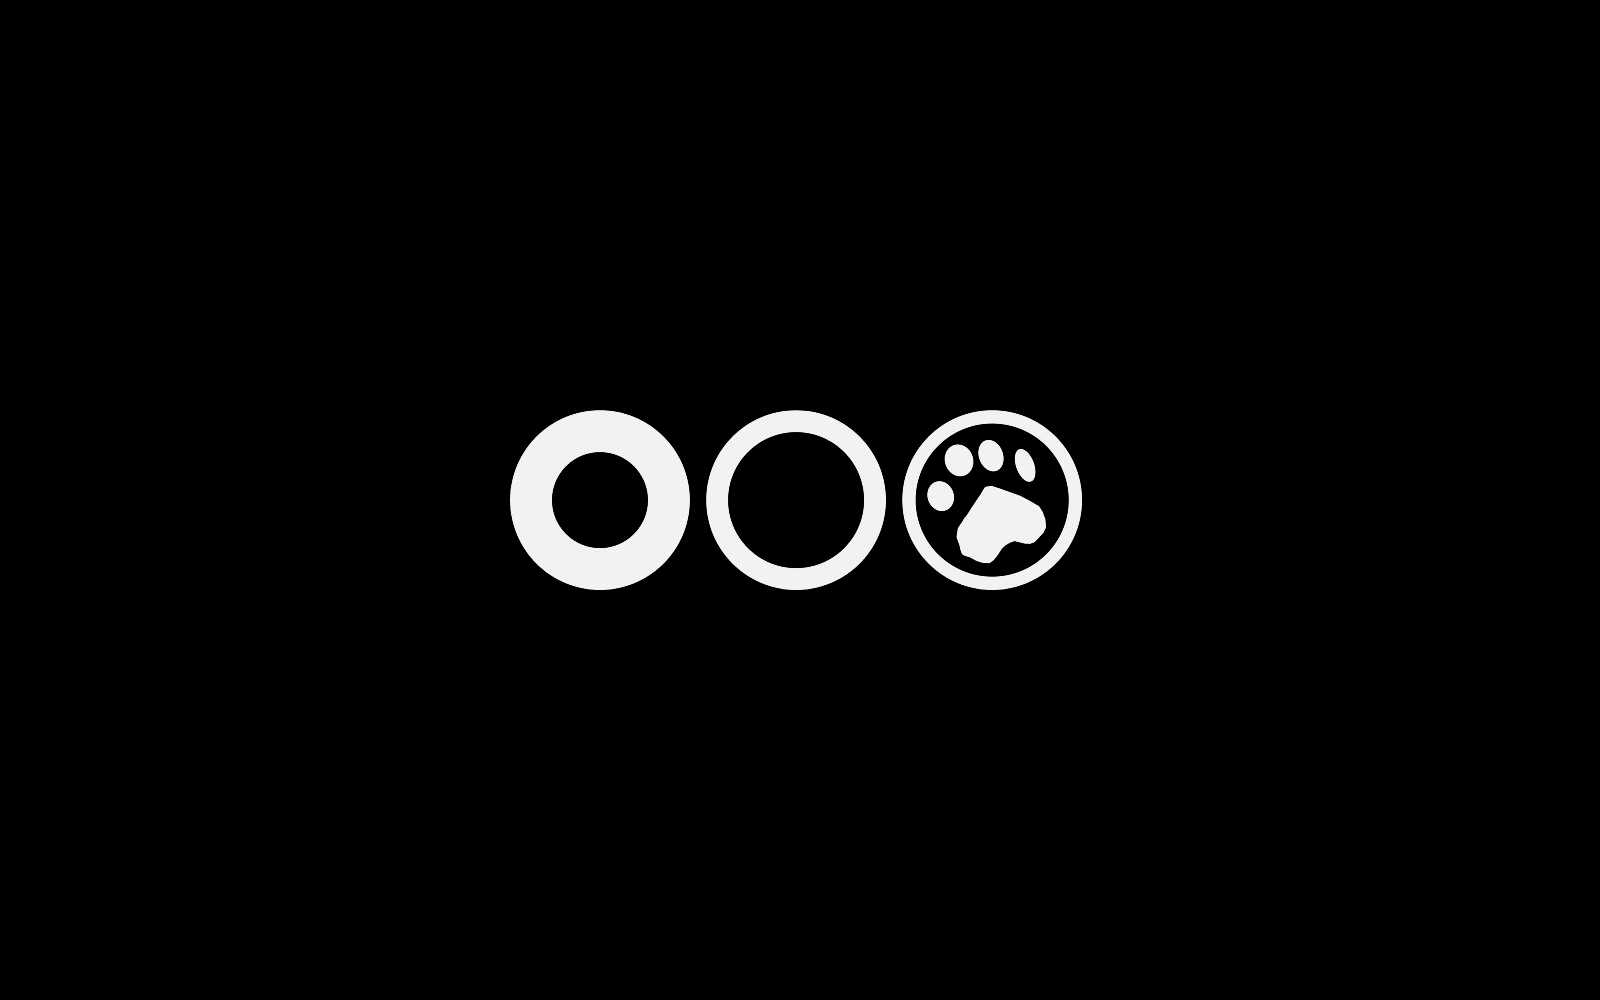 Labrador Records logo on a black background